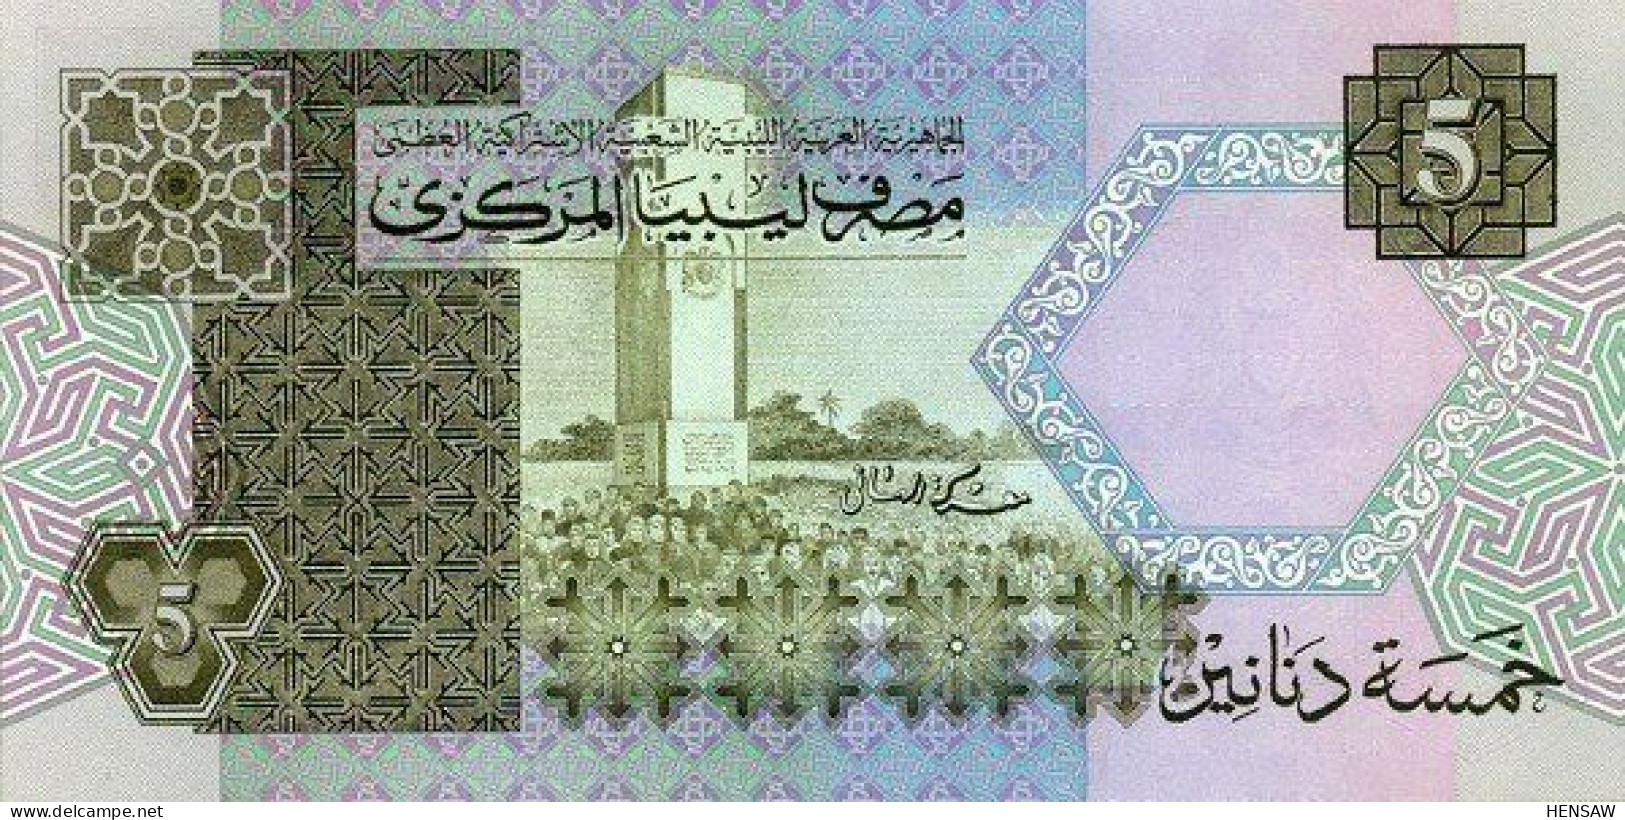 LIBYA 5 DINARS 1991 P 60c NUEVO UNC SC - Libya